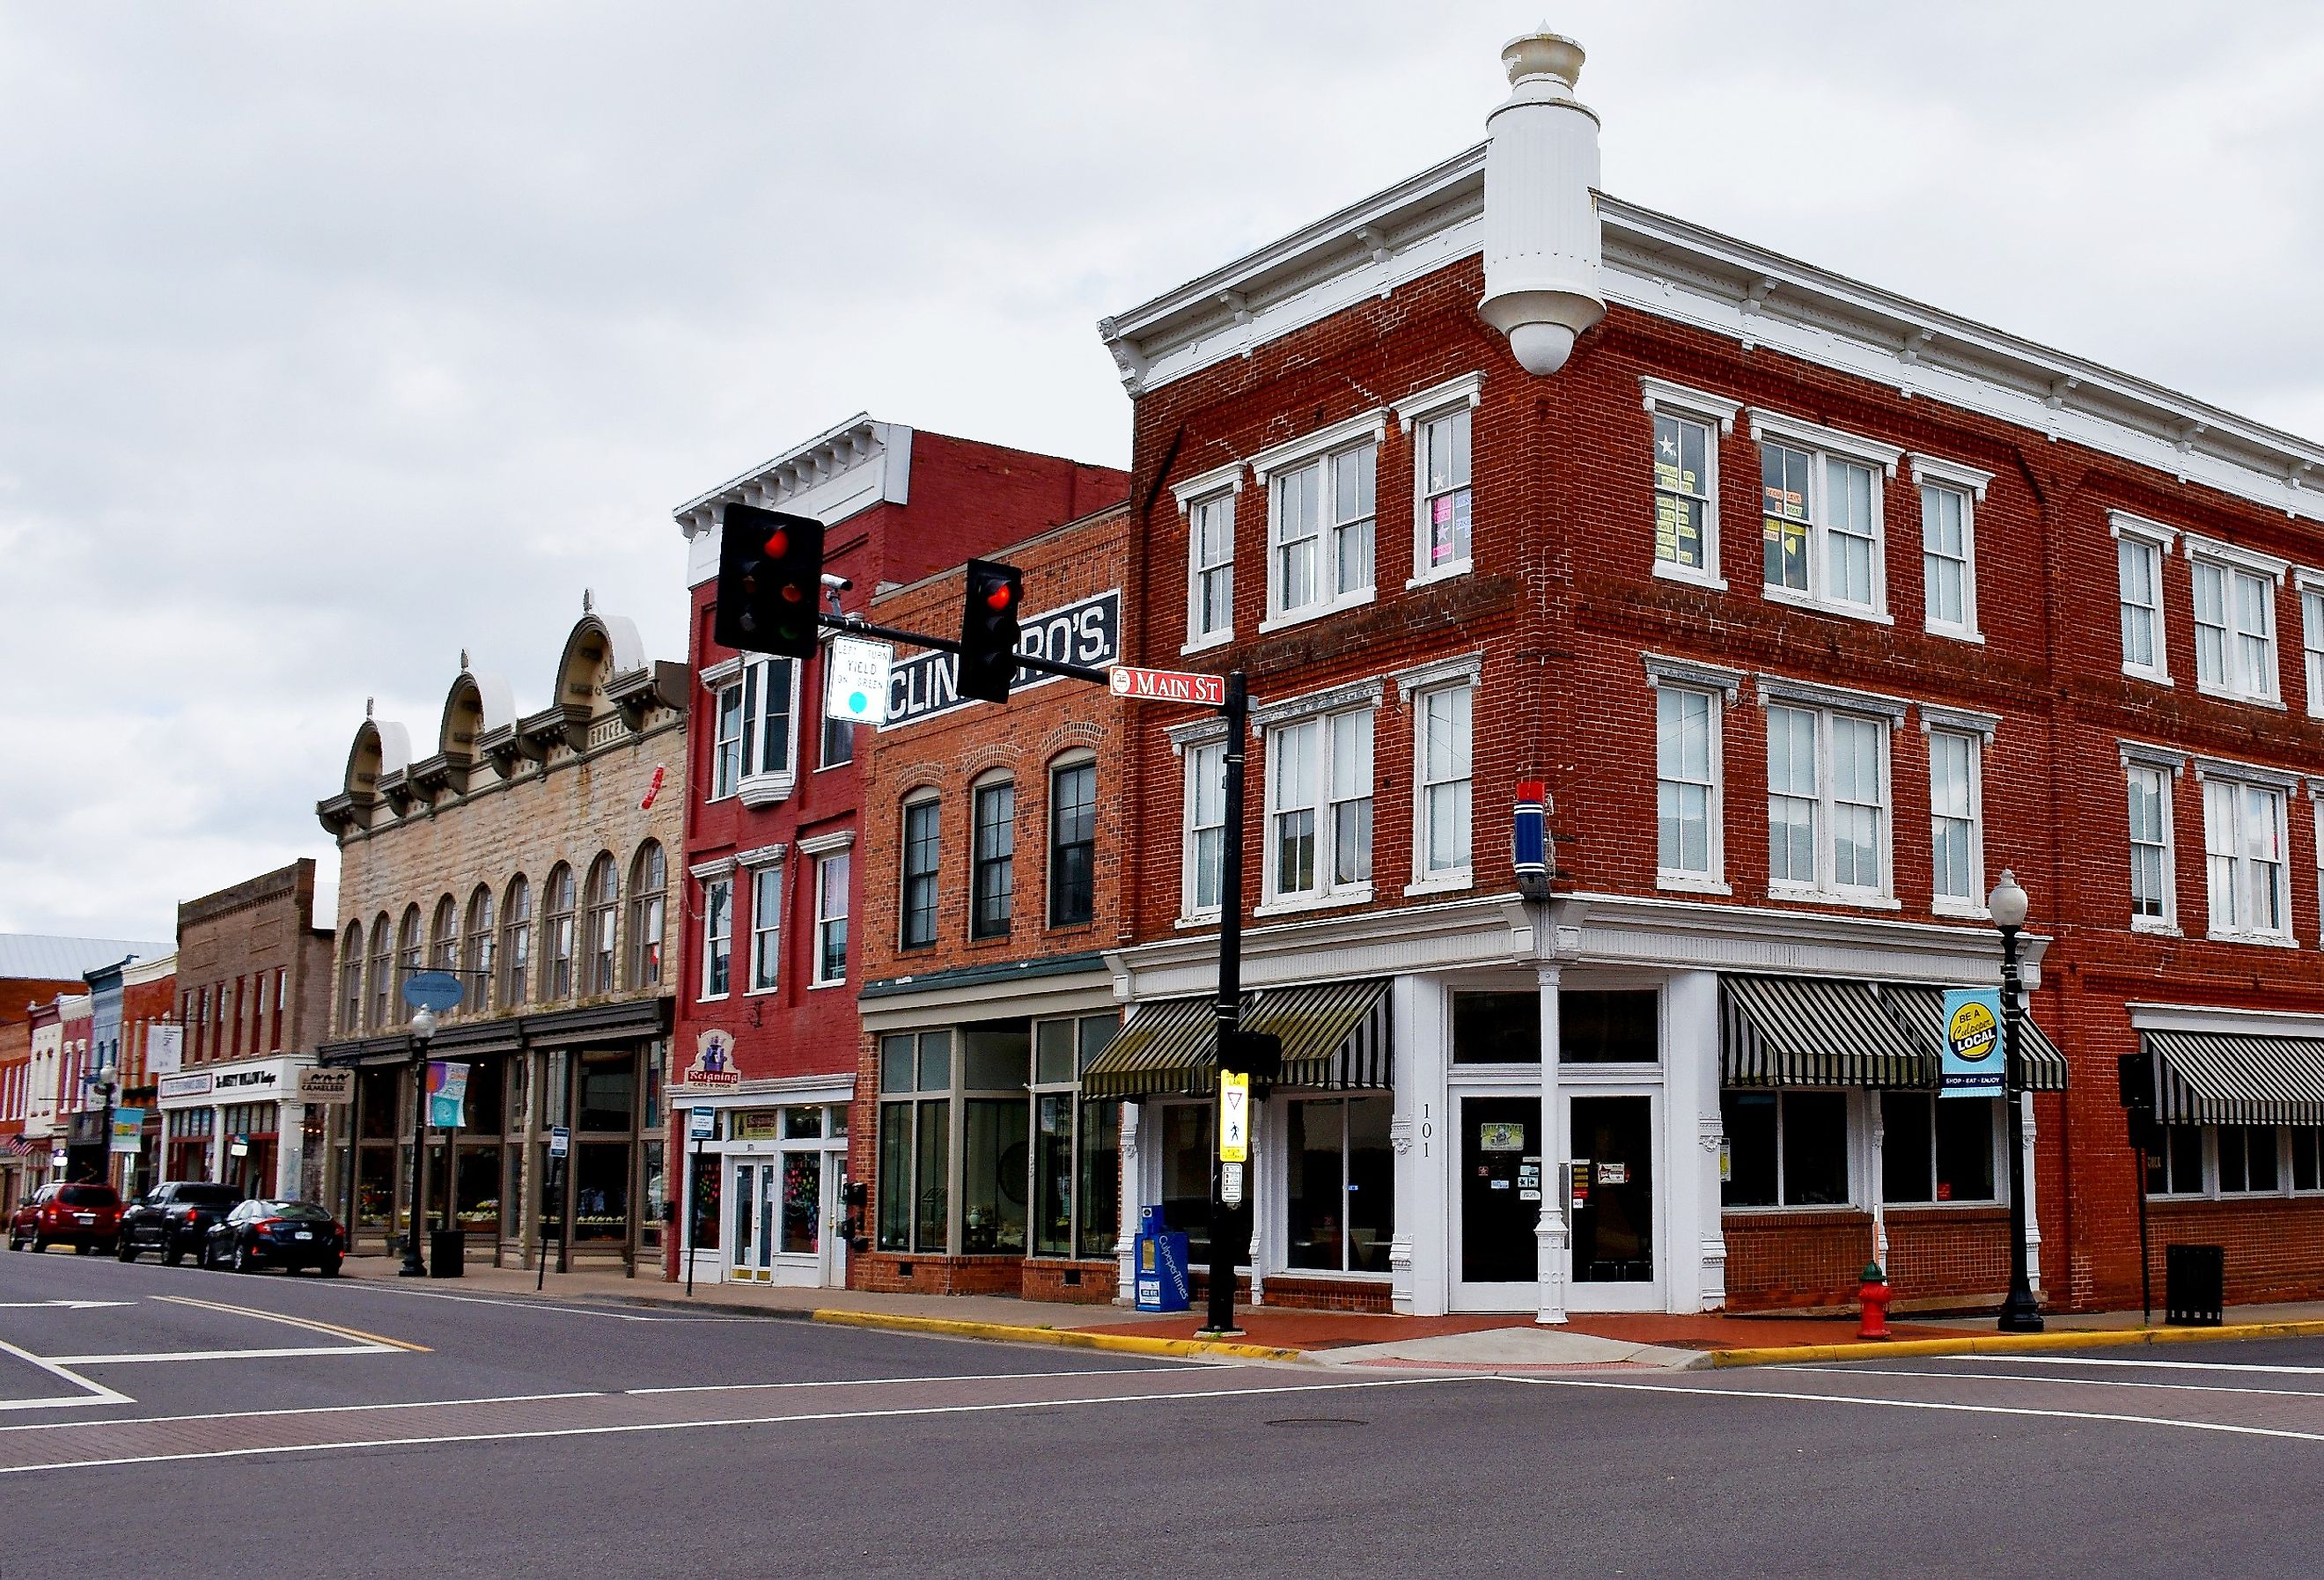 Downtown street in Culpeper, Virginia. Image credit refrina via Shutterstock